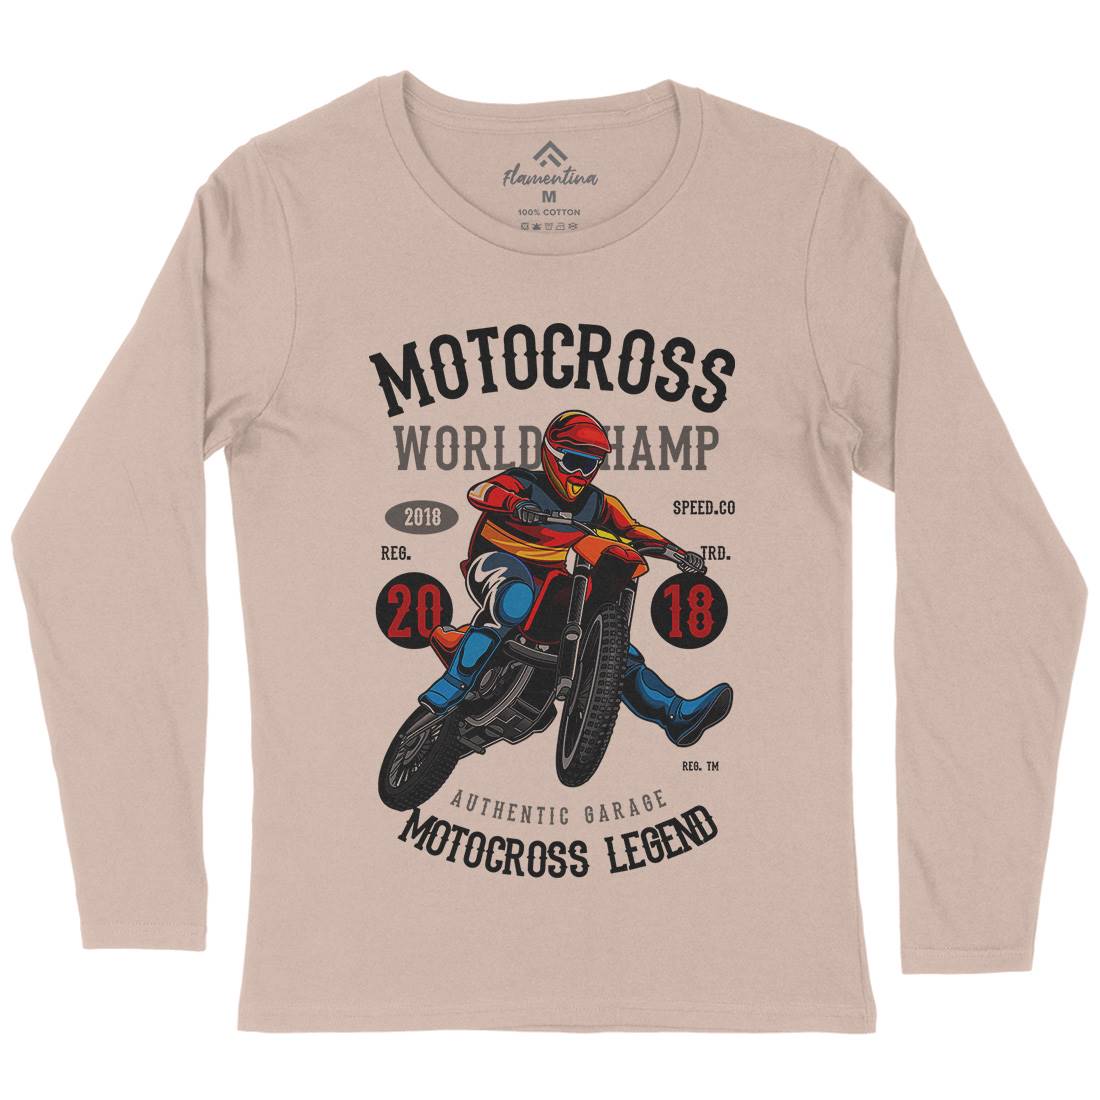 Motocross World Champ Womens Long Sleeve T-Shirt Motorcycles C398